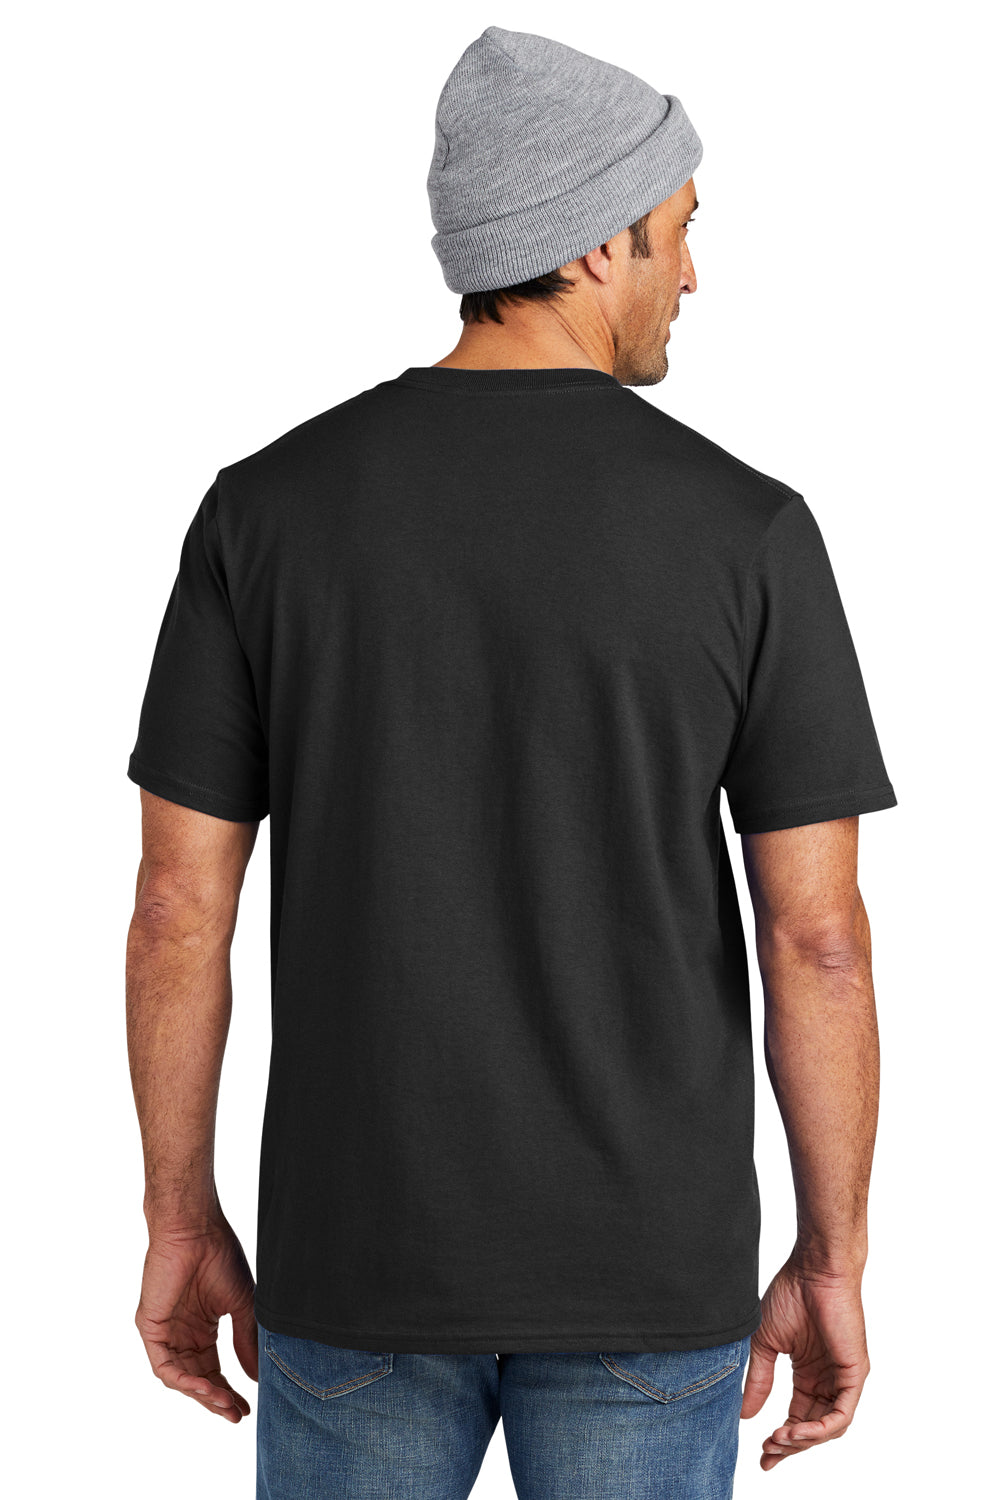 Volunteer Knitwear VL100P USA Made All American Short Sleeve Crewneck T-Shirt w/ Pocket Deep Black Back